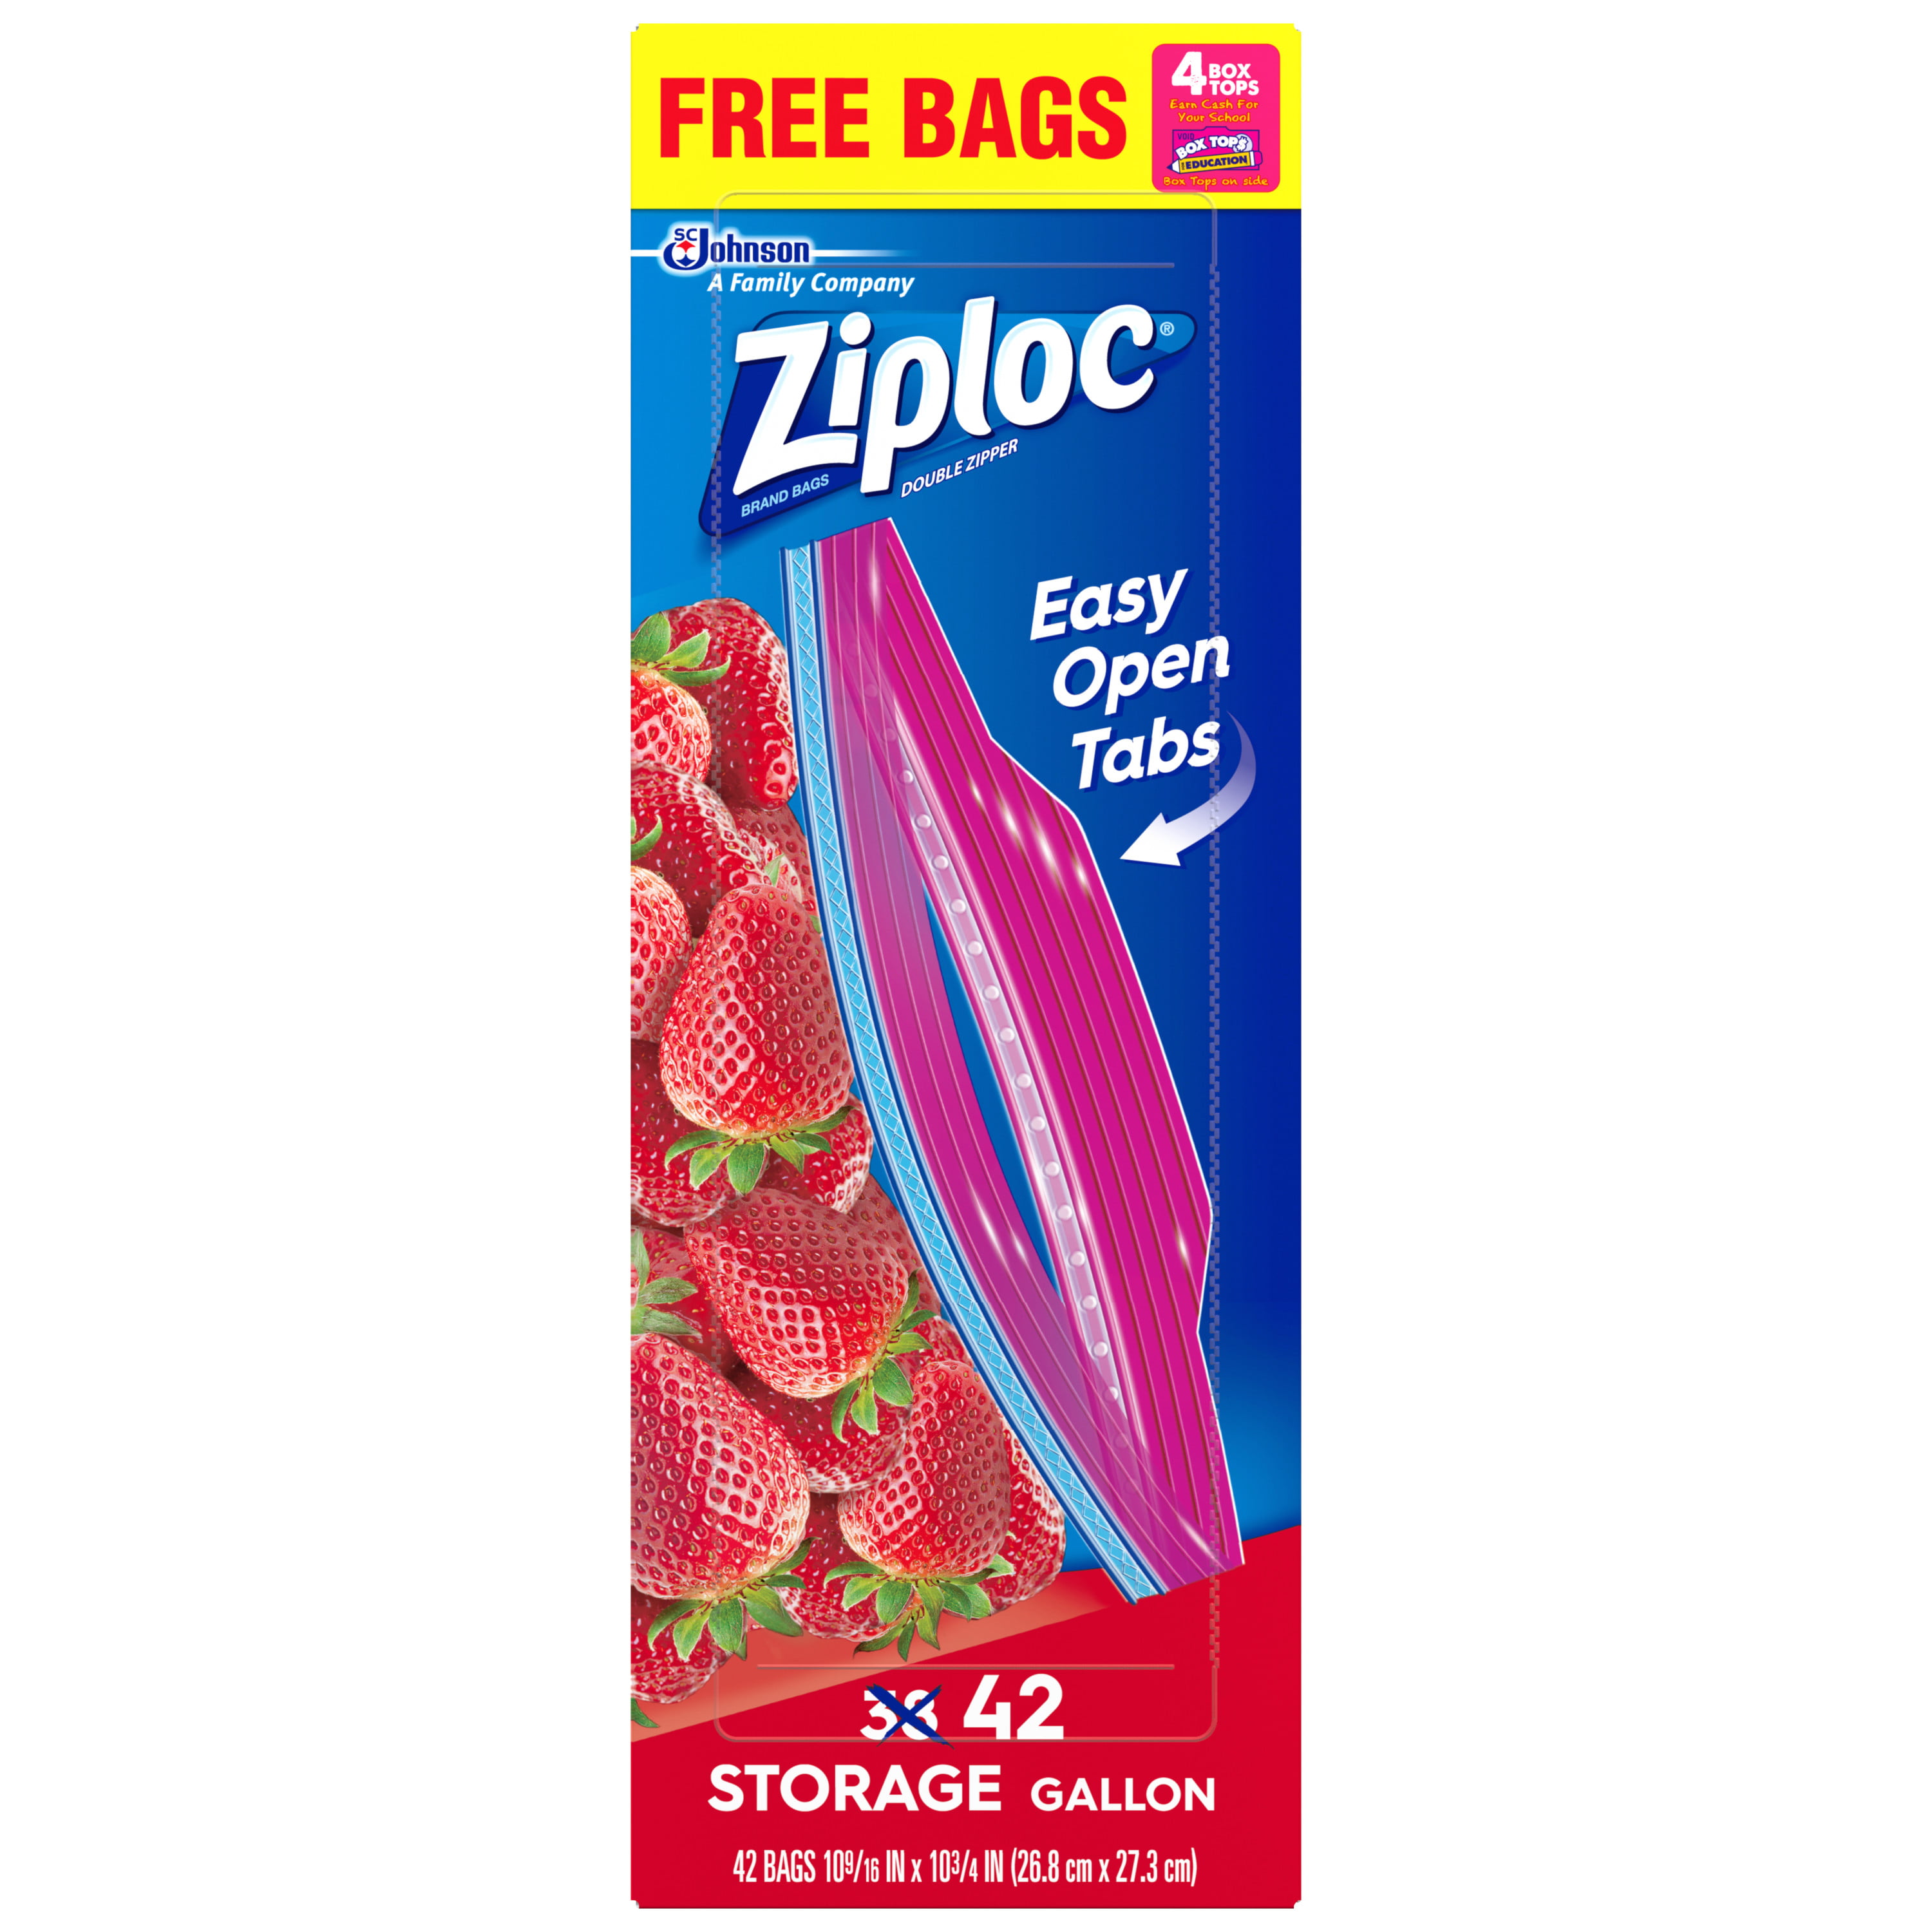 Ziploc, 12451-10019800707641, 1 Gallon Double Zipper Storage Bag